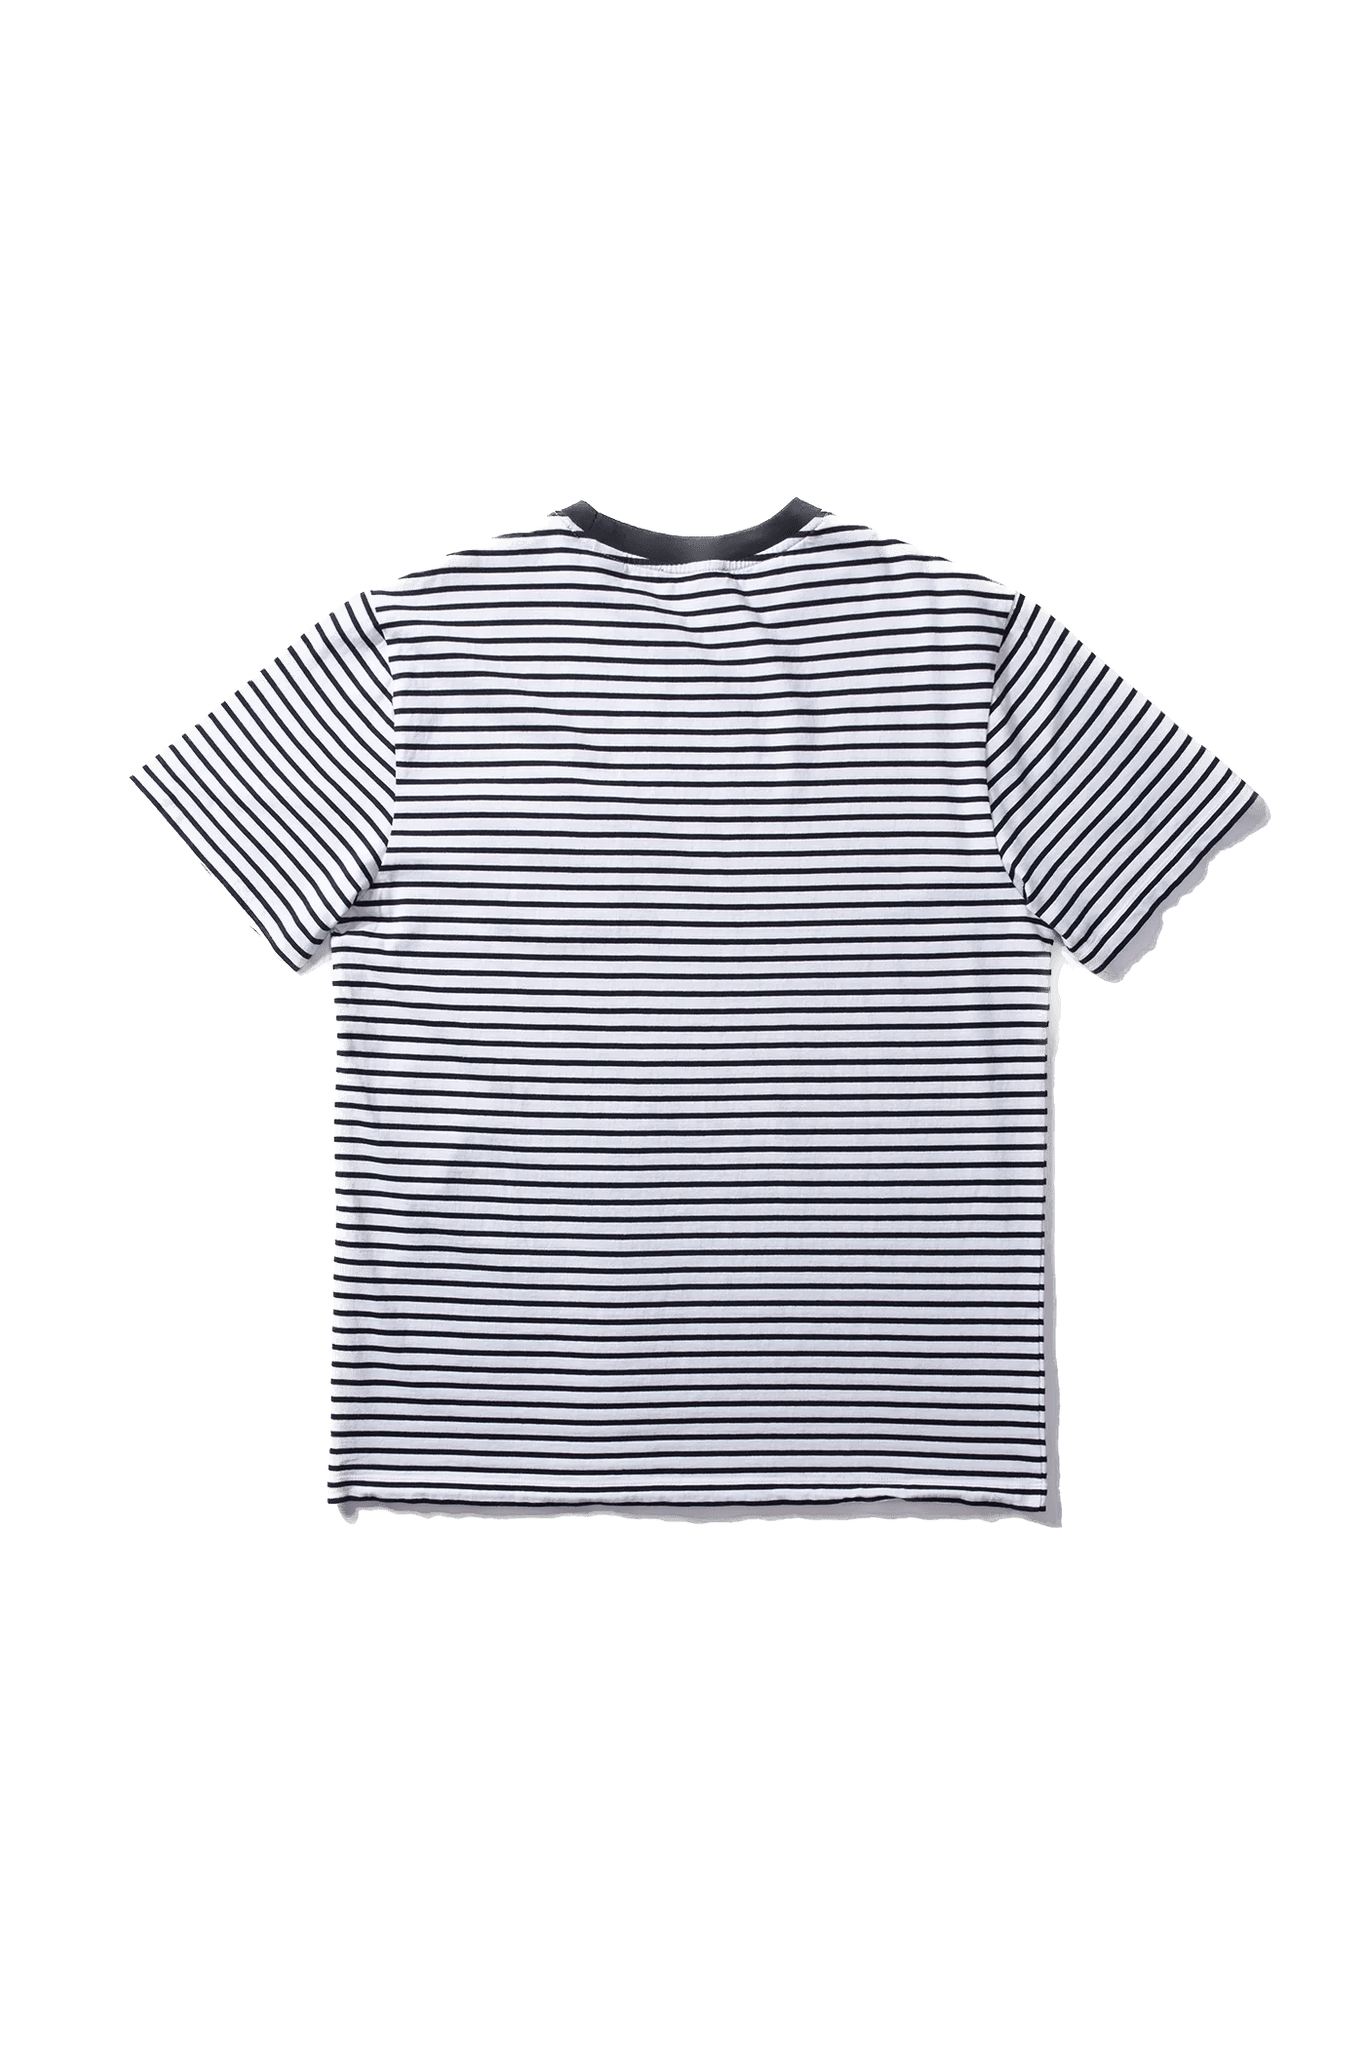 Camiseta Edmmond Studios Duck Patch Horizontal Stripes - ECRU